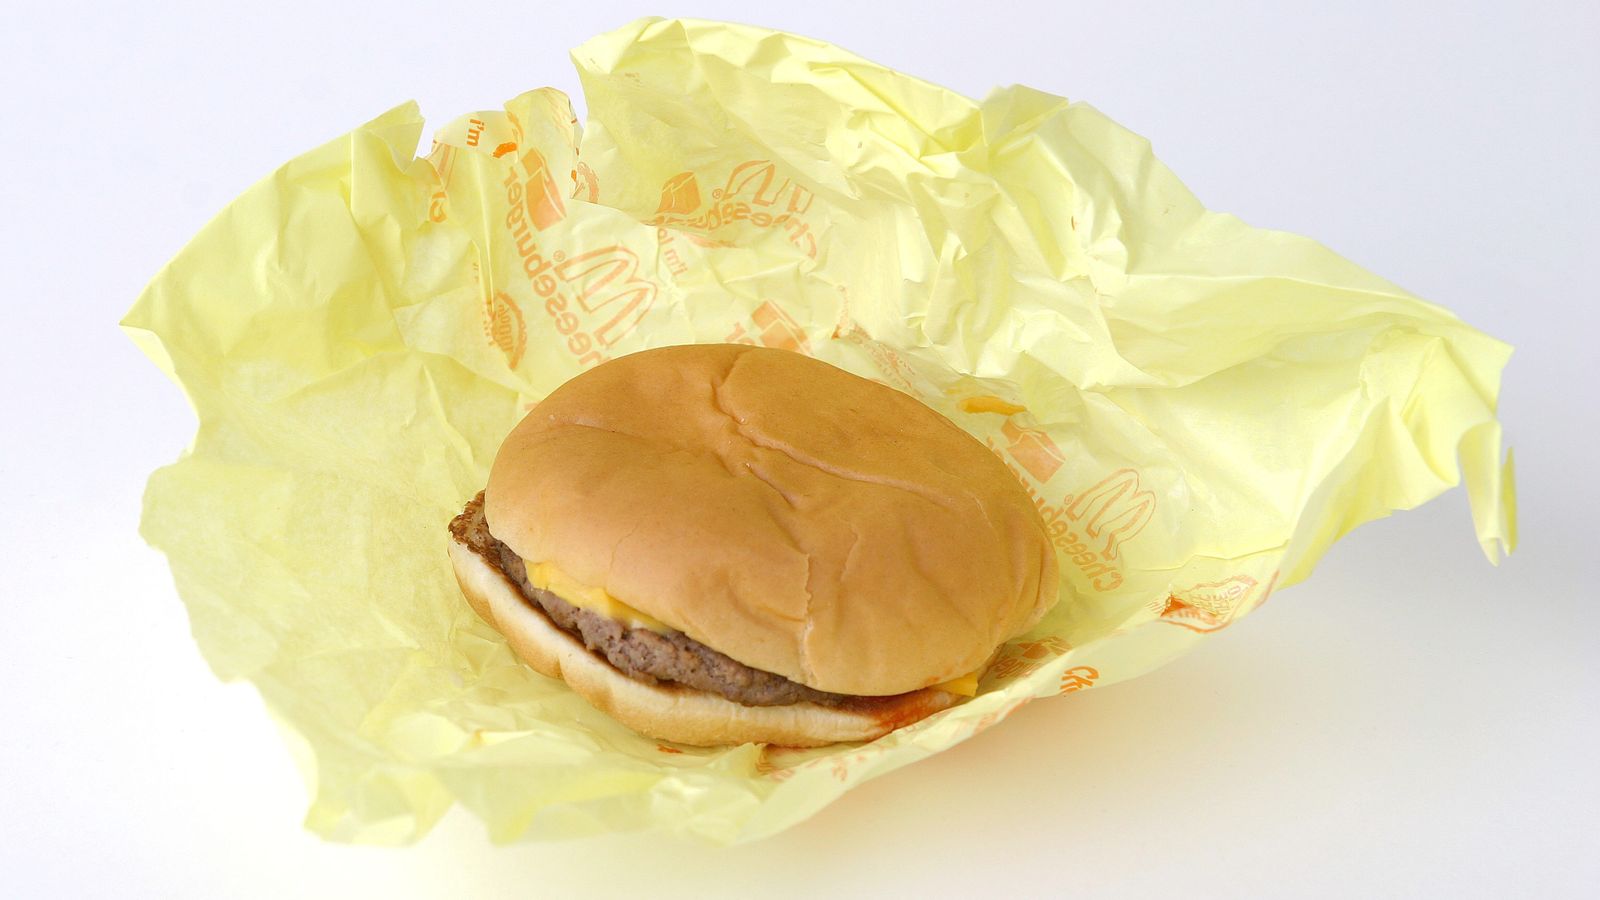 McDonald's cheeseburger price increases